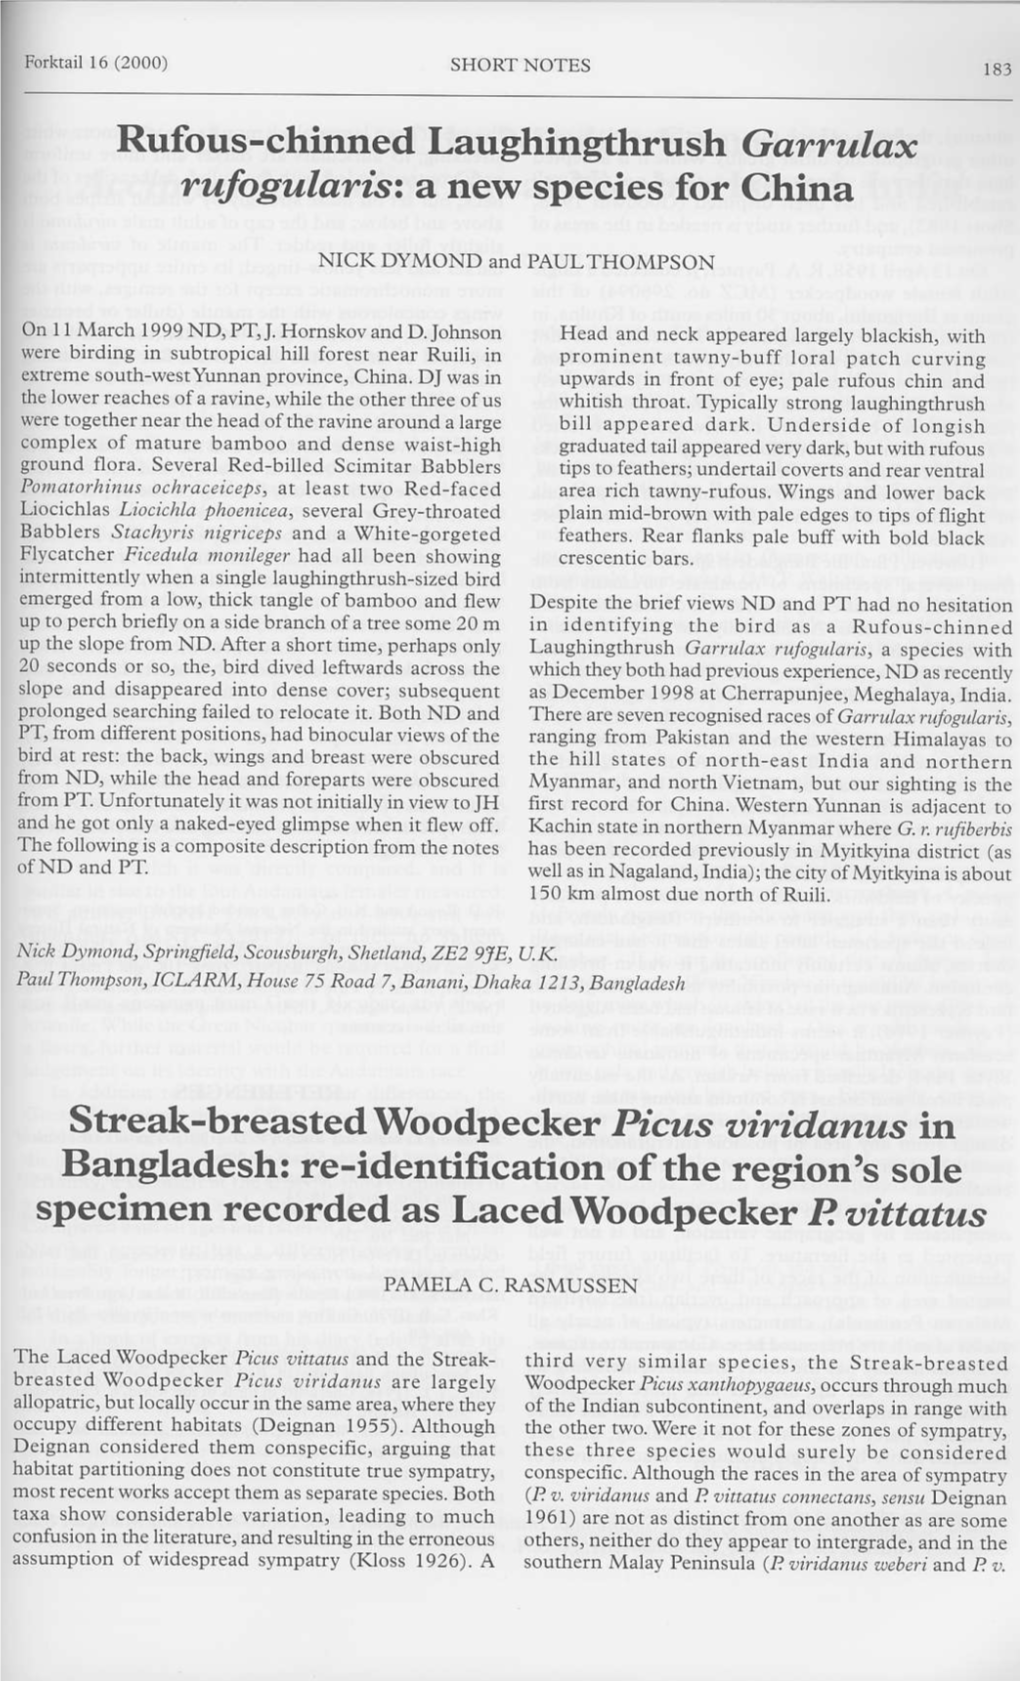 Streak-Breasted Woodpecker Pl:Cus Oiridanus in Bangladesh: Re-Identification of the Region's Sole Specirnen Recorded As Laced Woodpecker P Oittatus